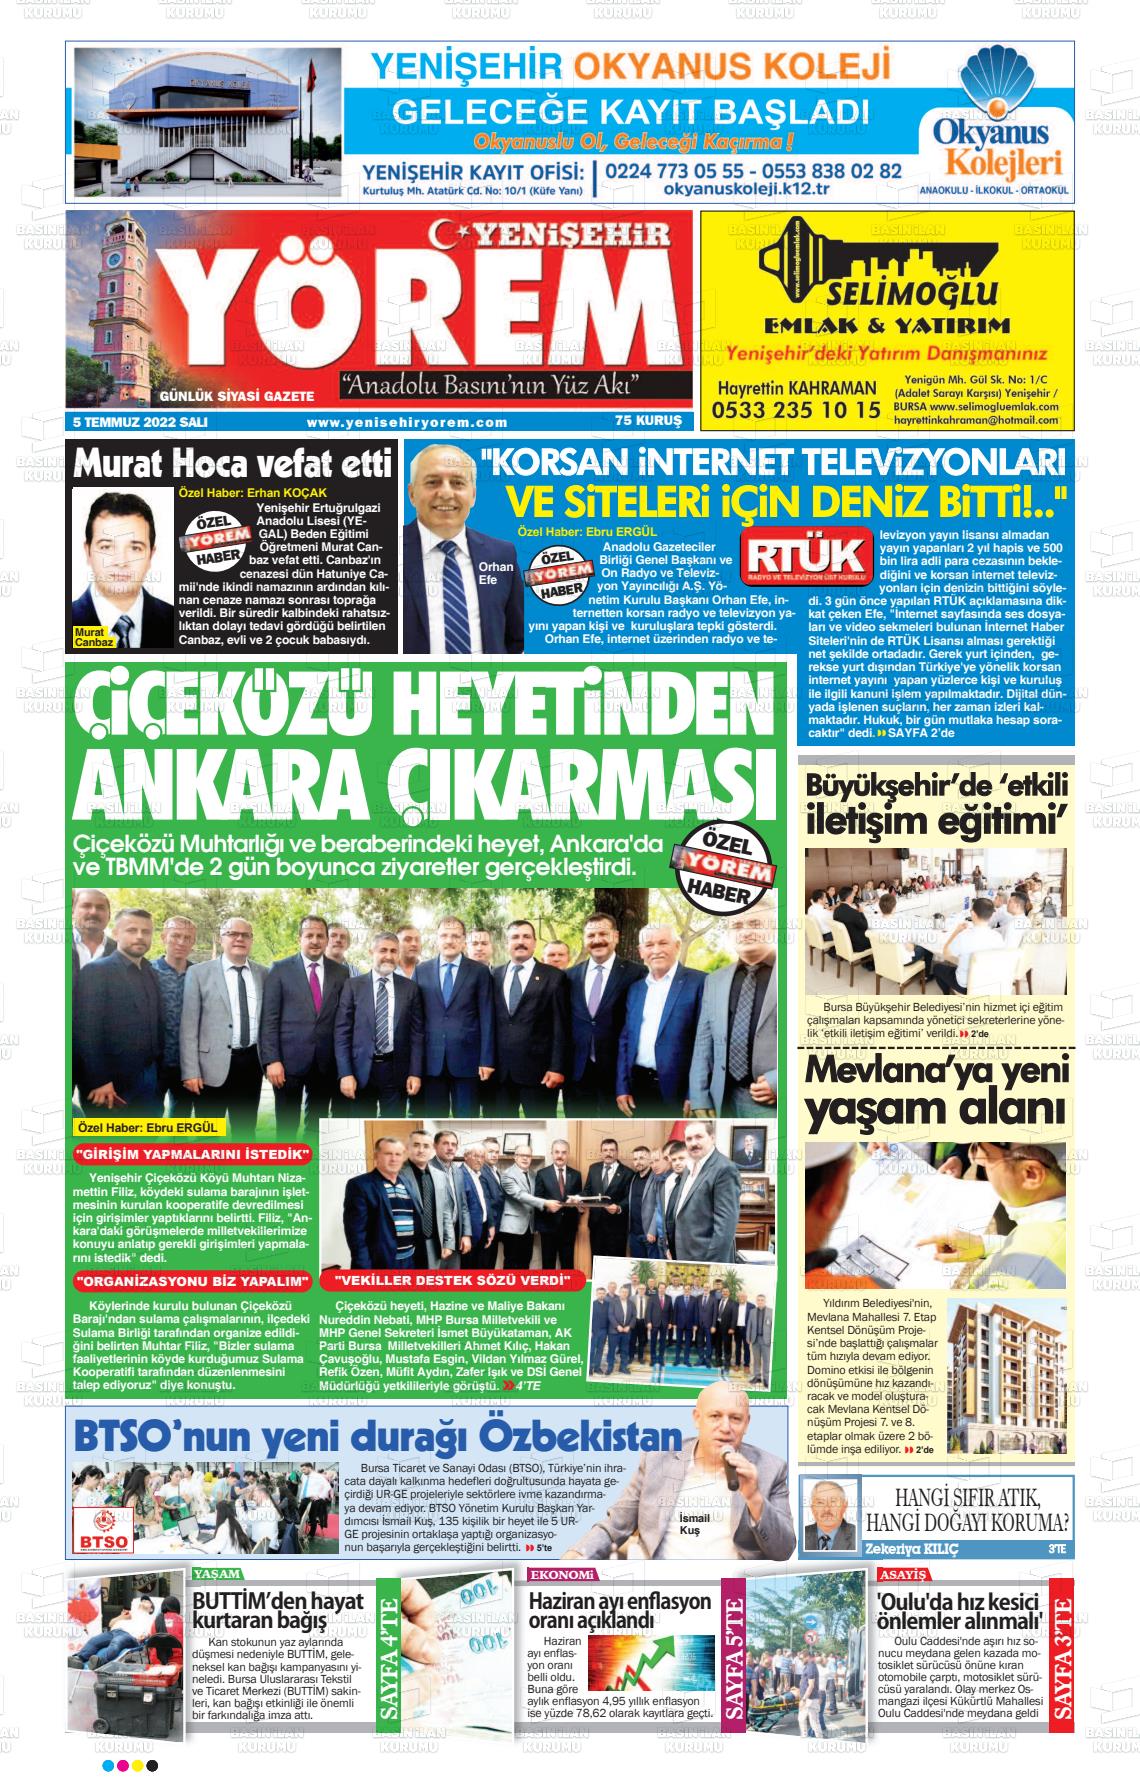 05 Temmuz 2022 Yenişehir Yörem Gazete Manşeti